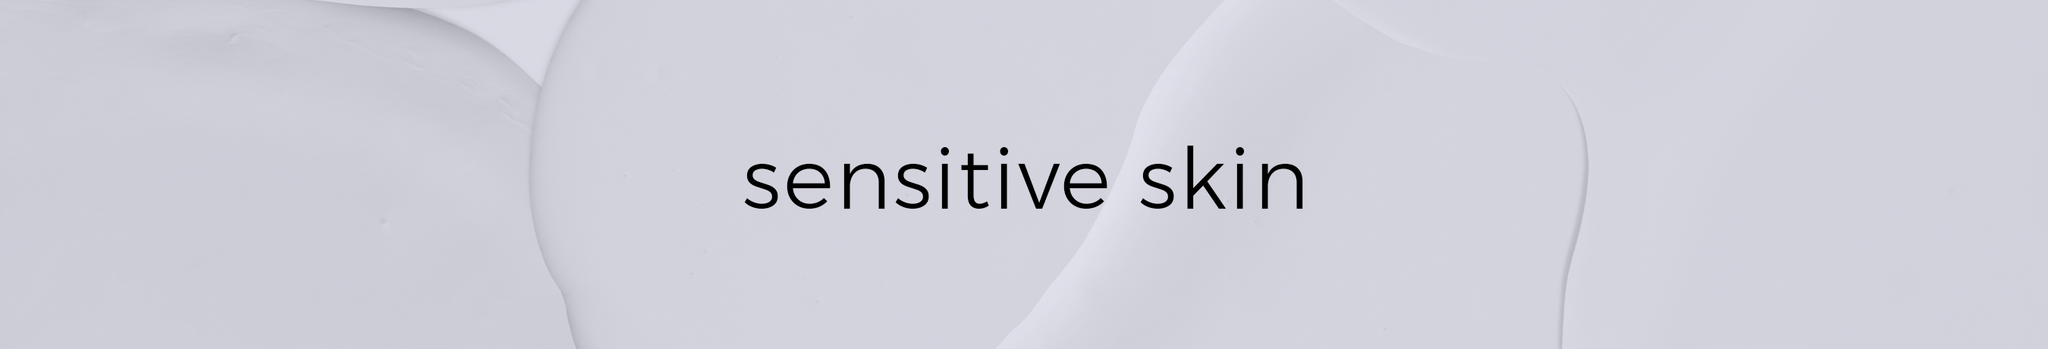 sensitive_skin